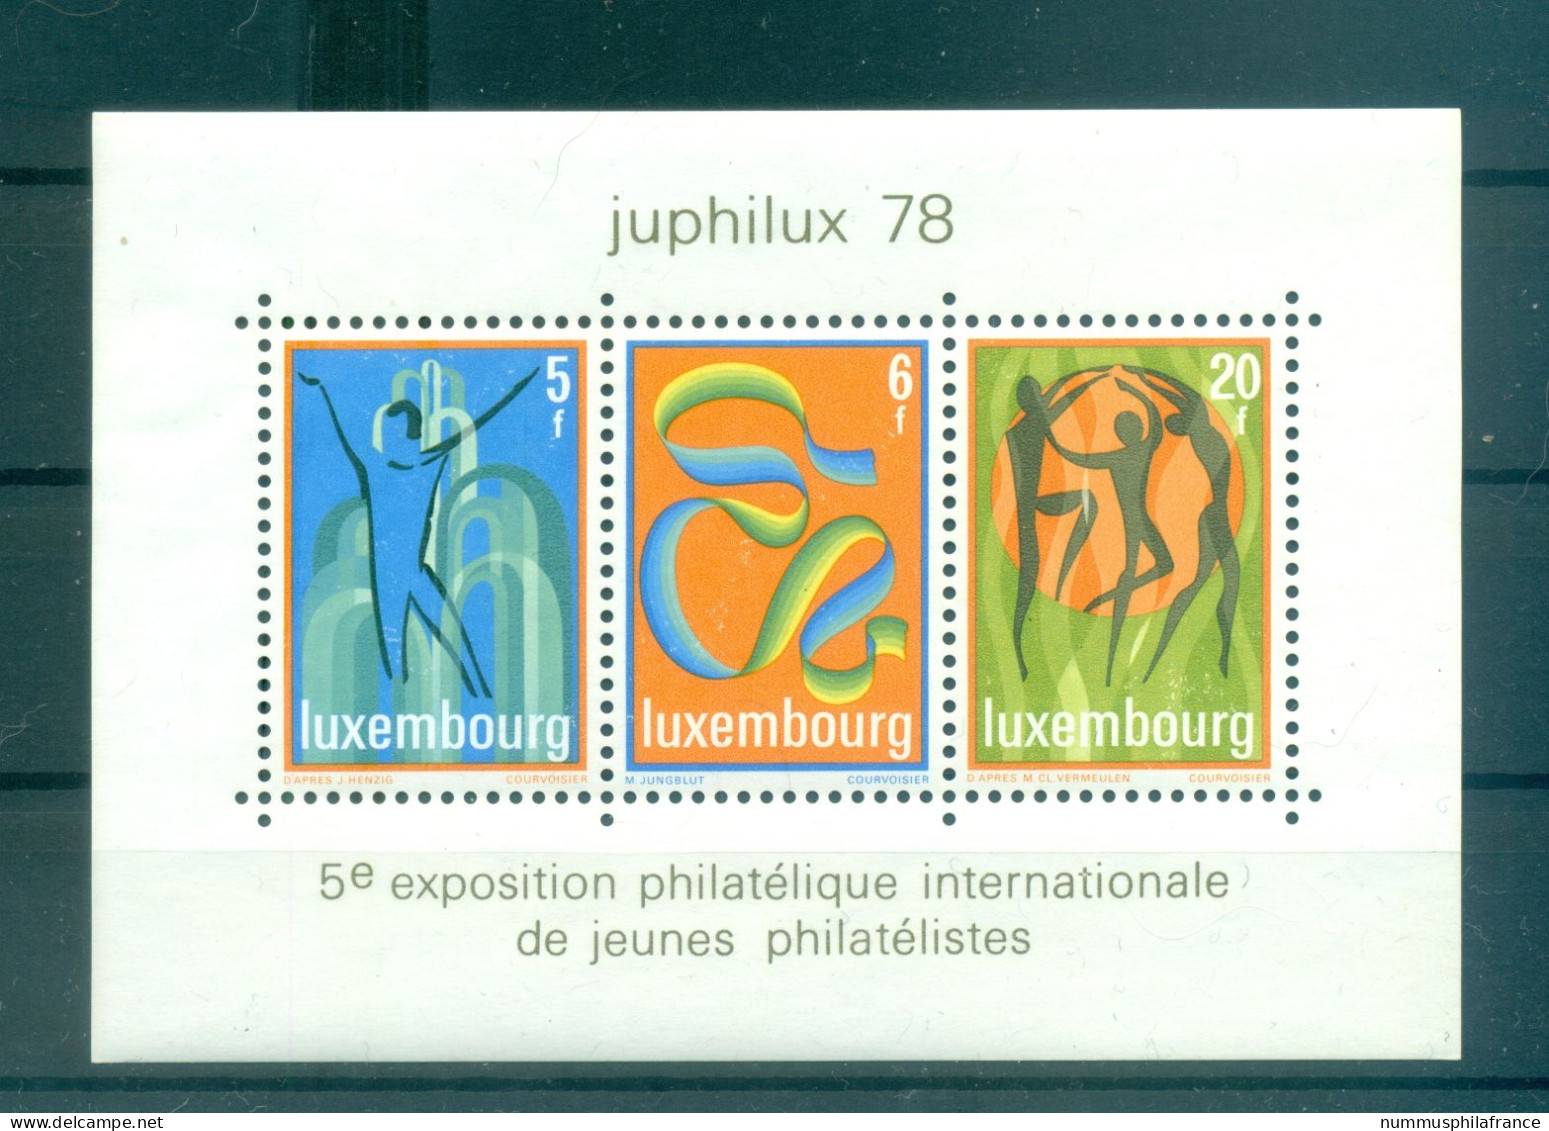 Luxembourg 1978 - Y & T Feuillet N. 12 - Juphilux '78 (Michel Feuillet N. 12) - Blocs & Hojas